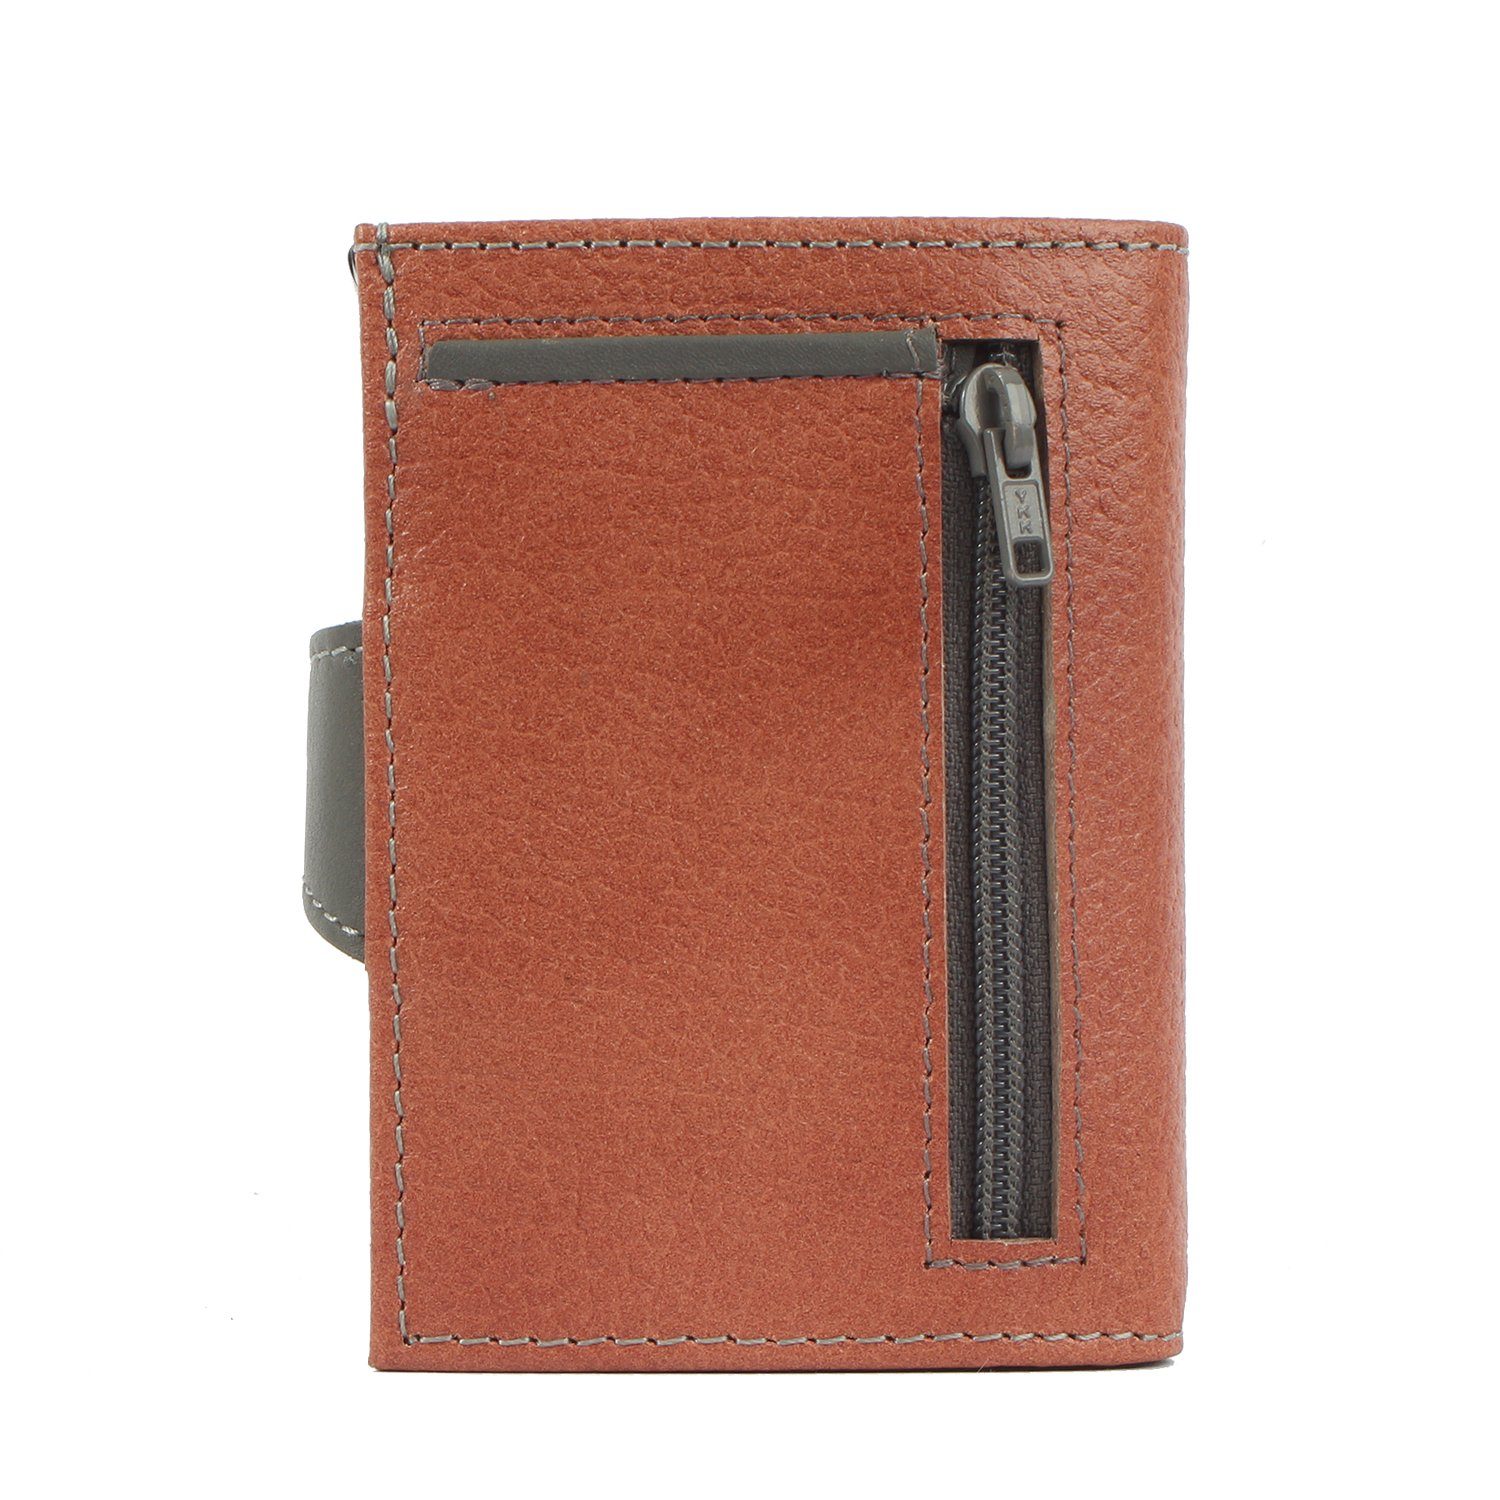 Margelisch Mini Geldbörse noonyu double aus Leder Kreditkartenbörse Upcycling RFID leather, salmon